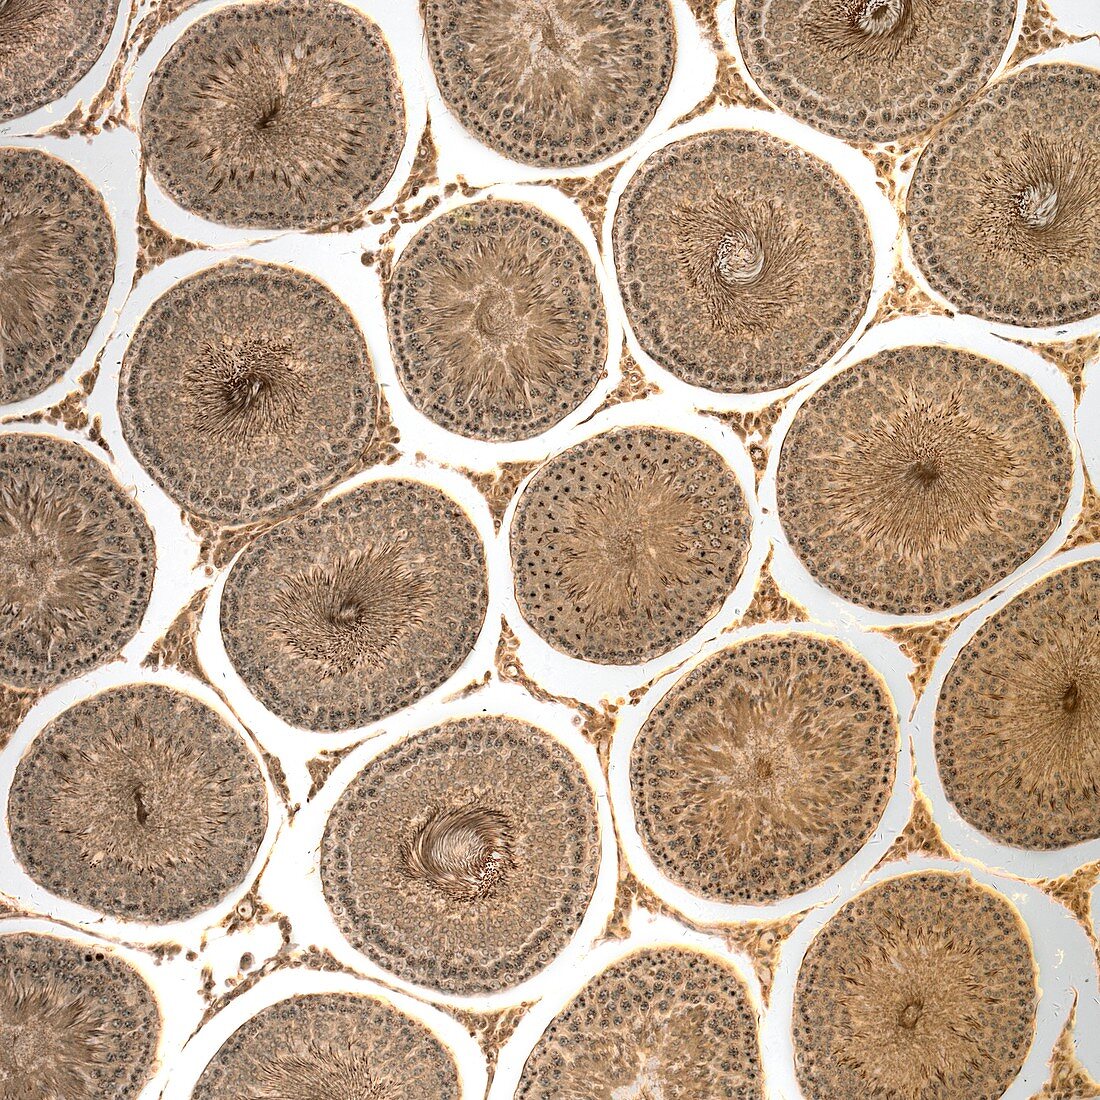 Testis tissue,confocal micrograph